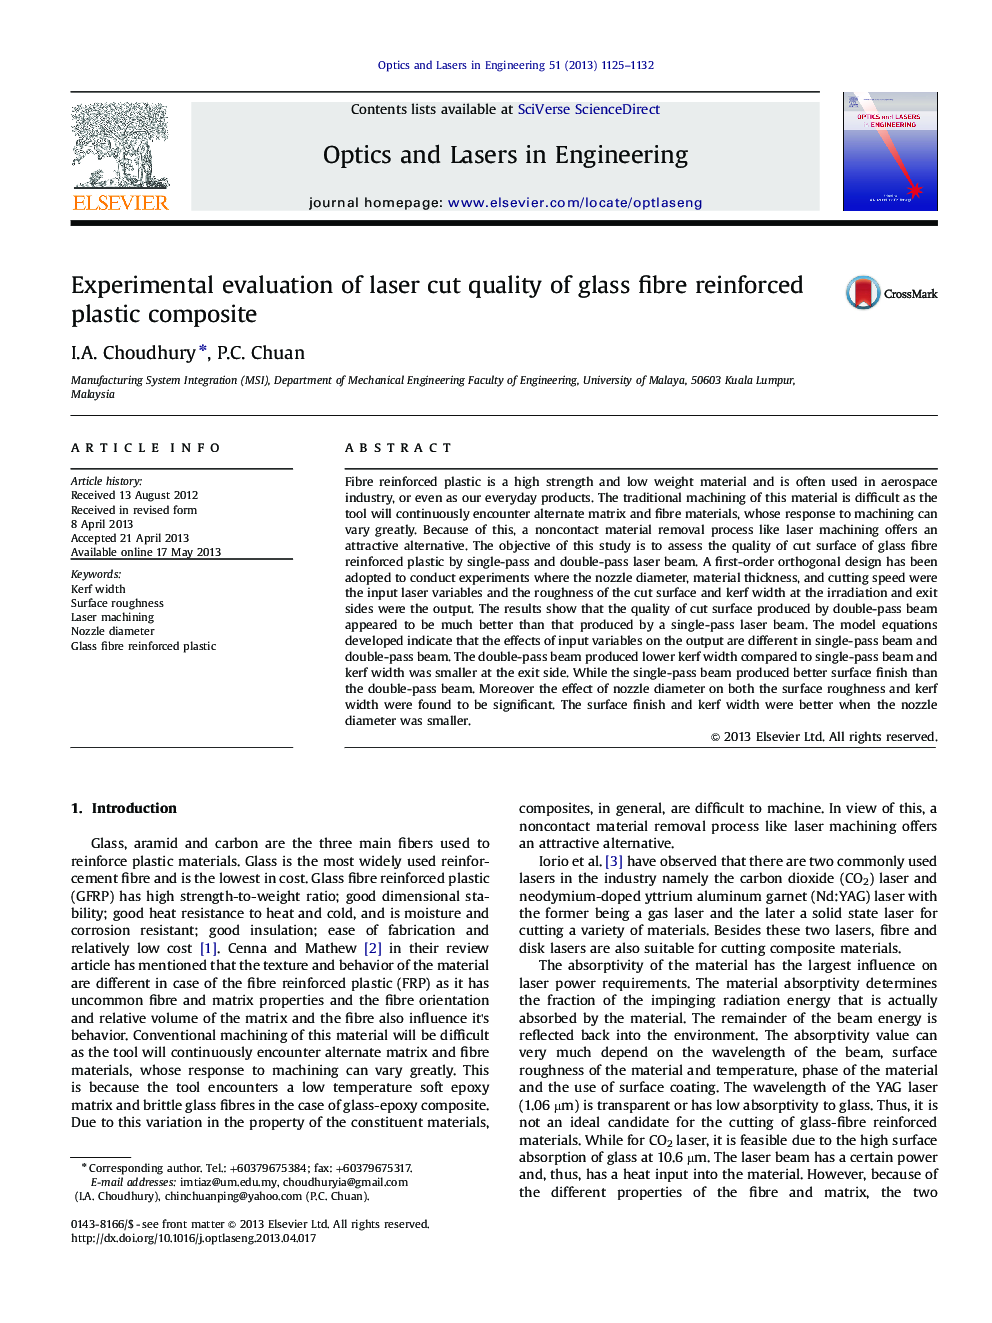 Experimental evaluation of laser cut quality of glass fibre reinforced plastic composite